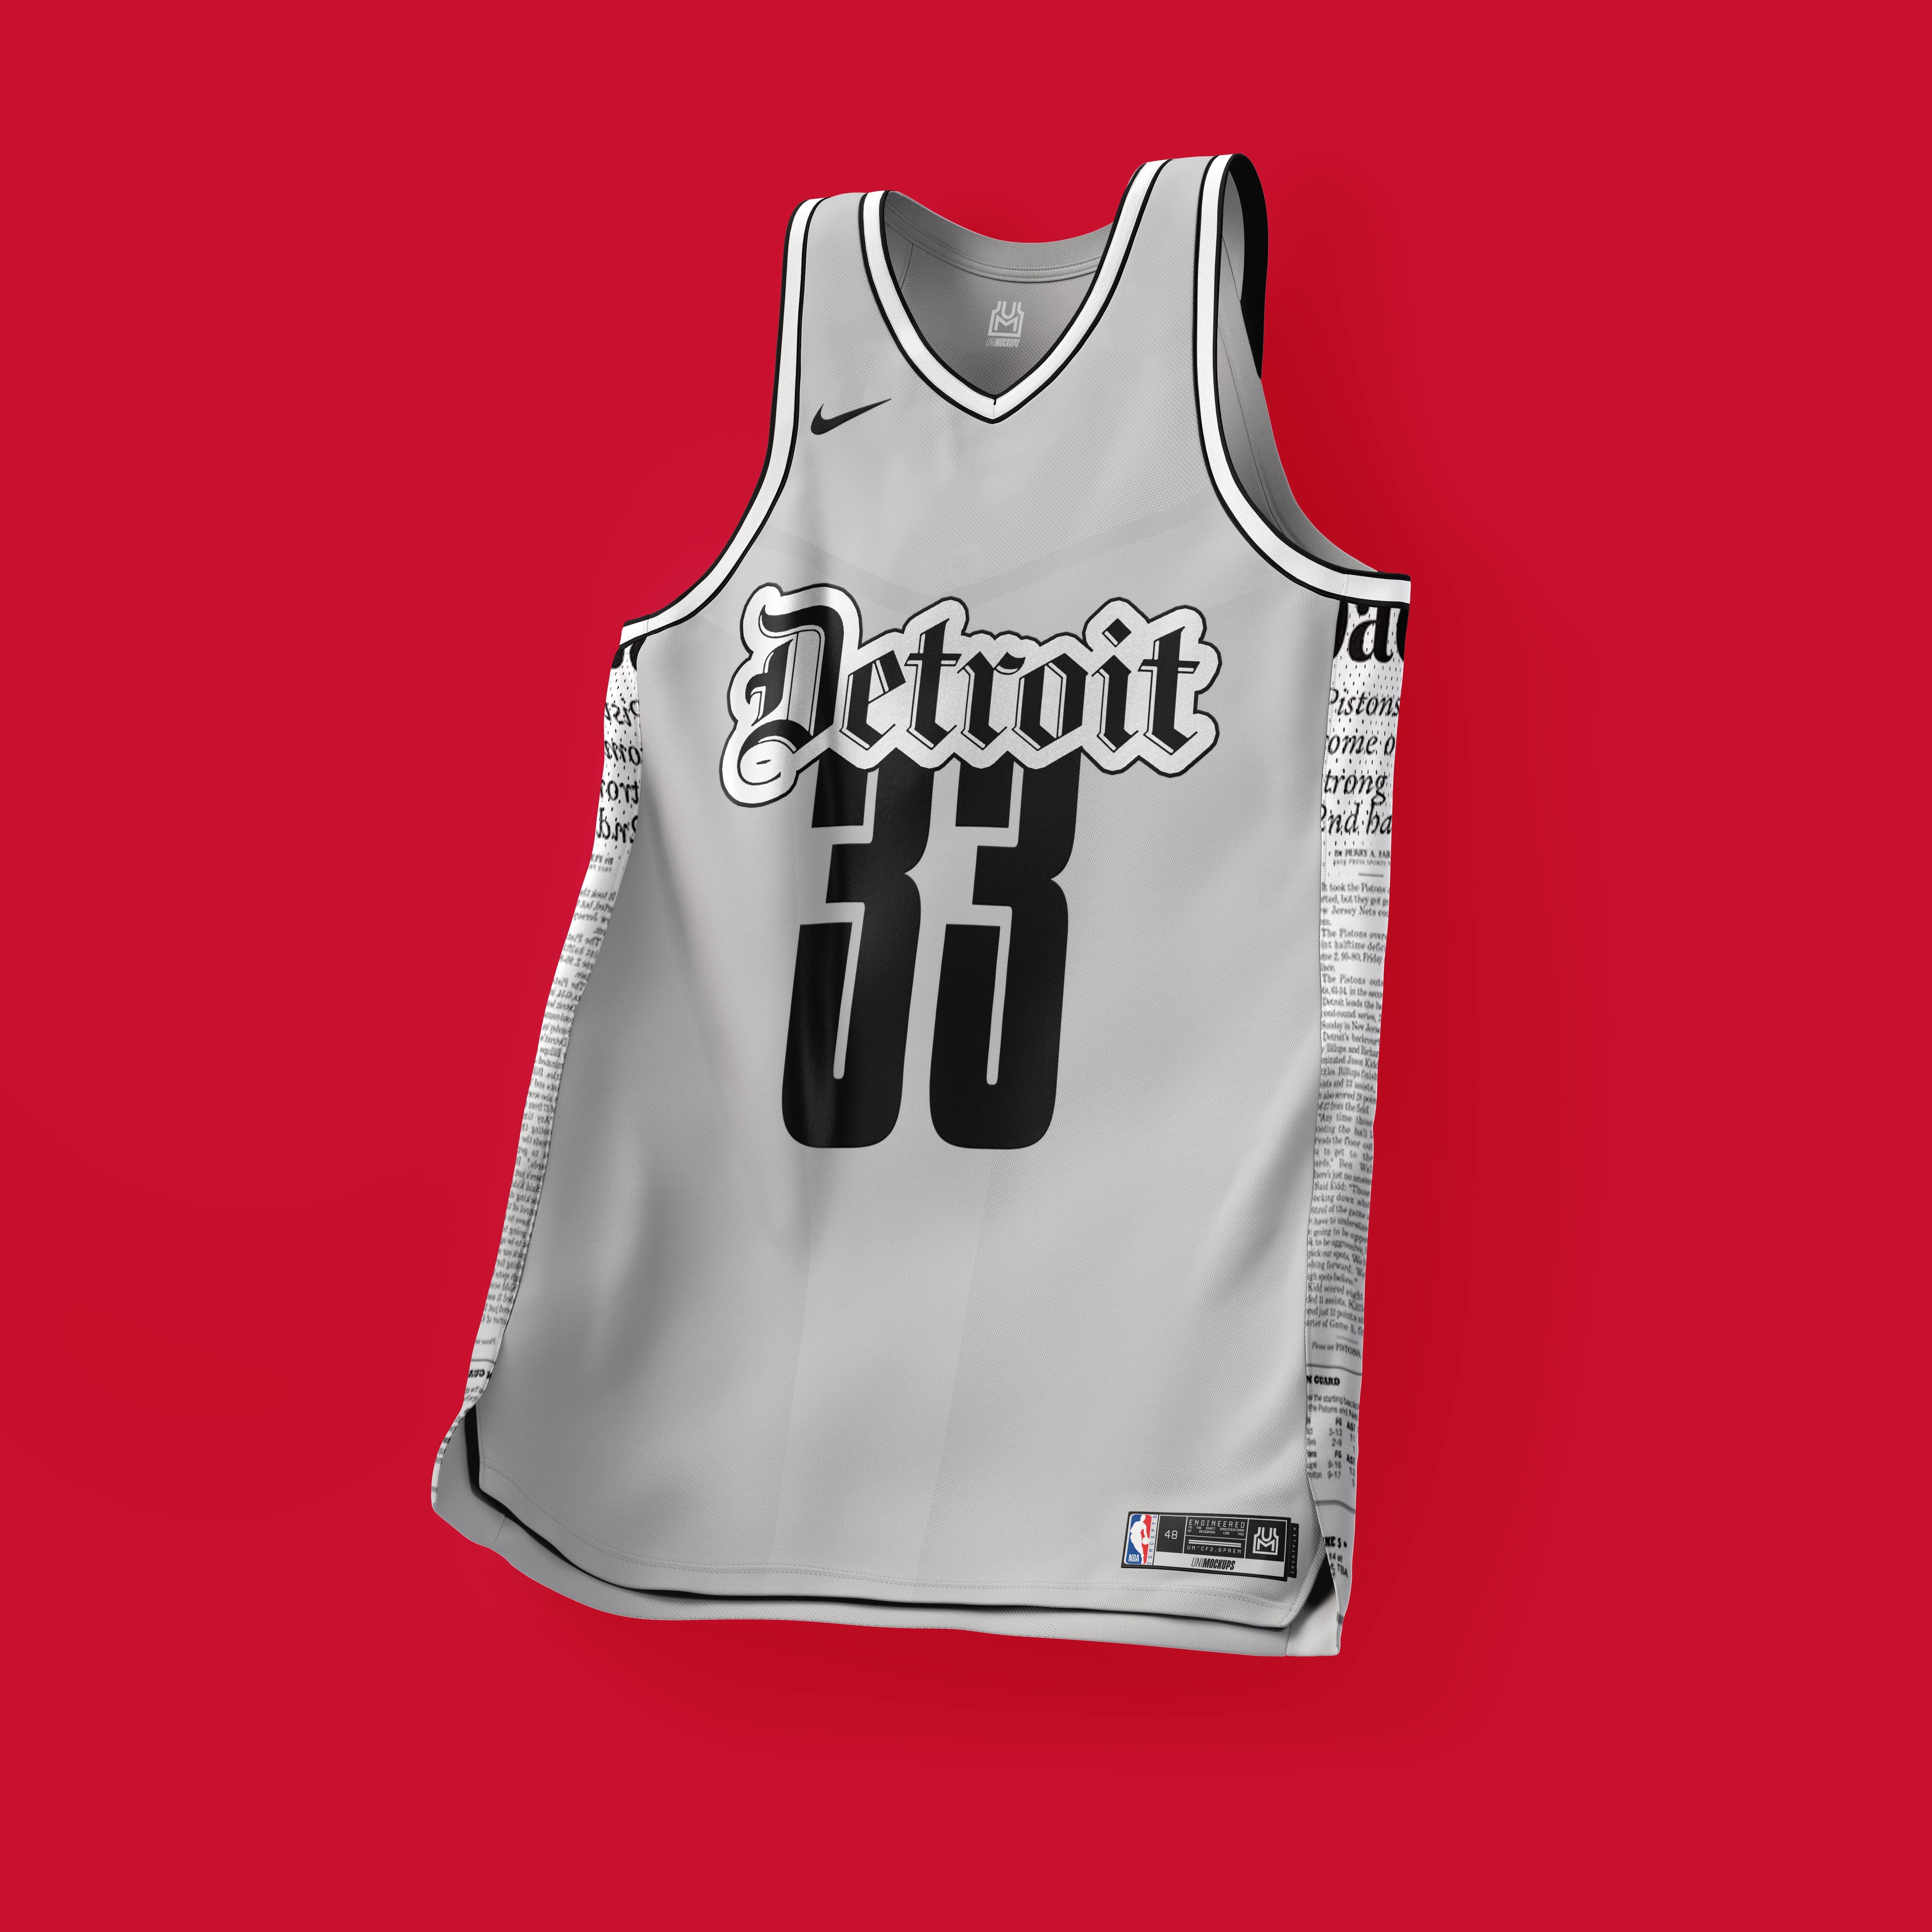 Premium AI Image  Design a new alternate jersey for the NBA